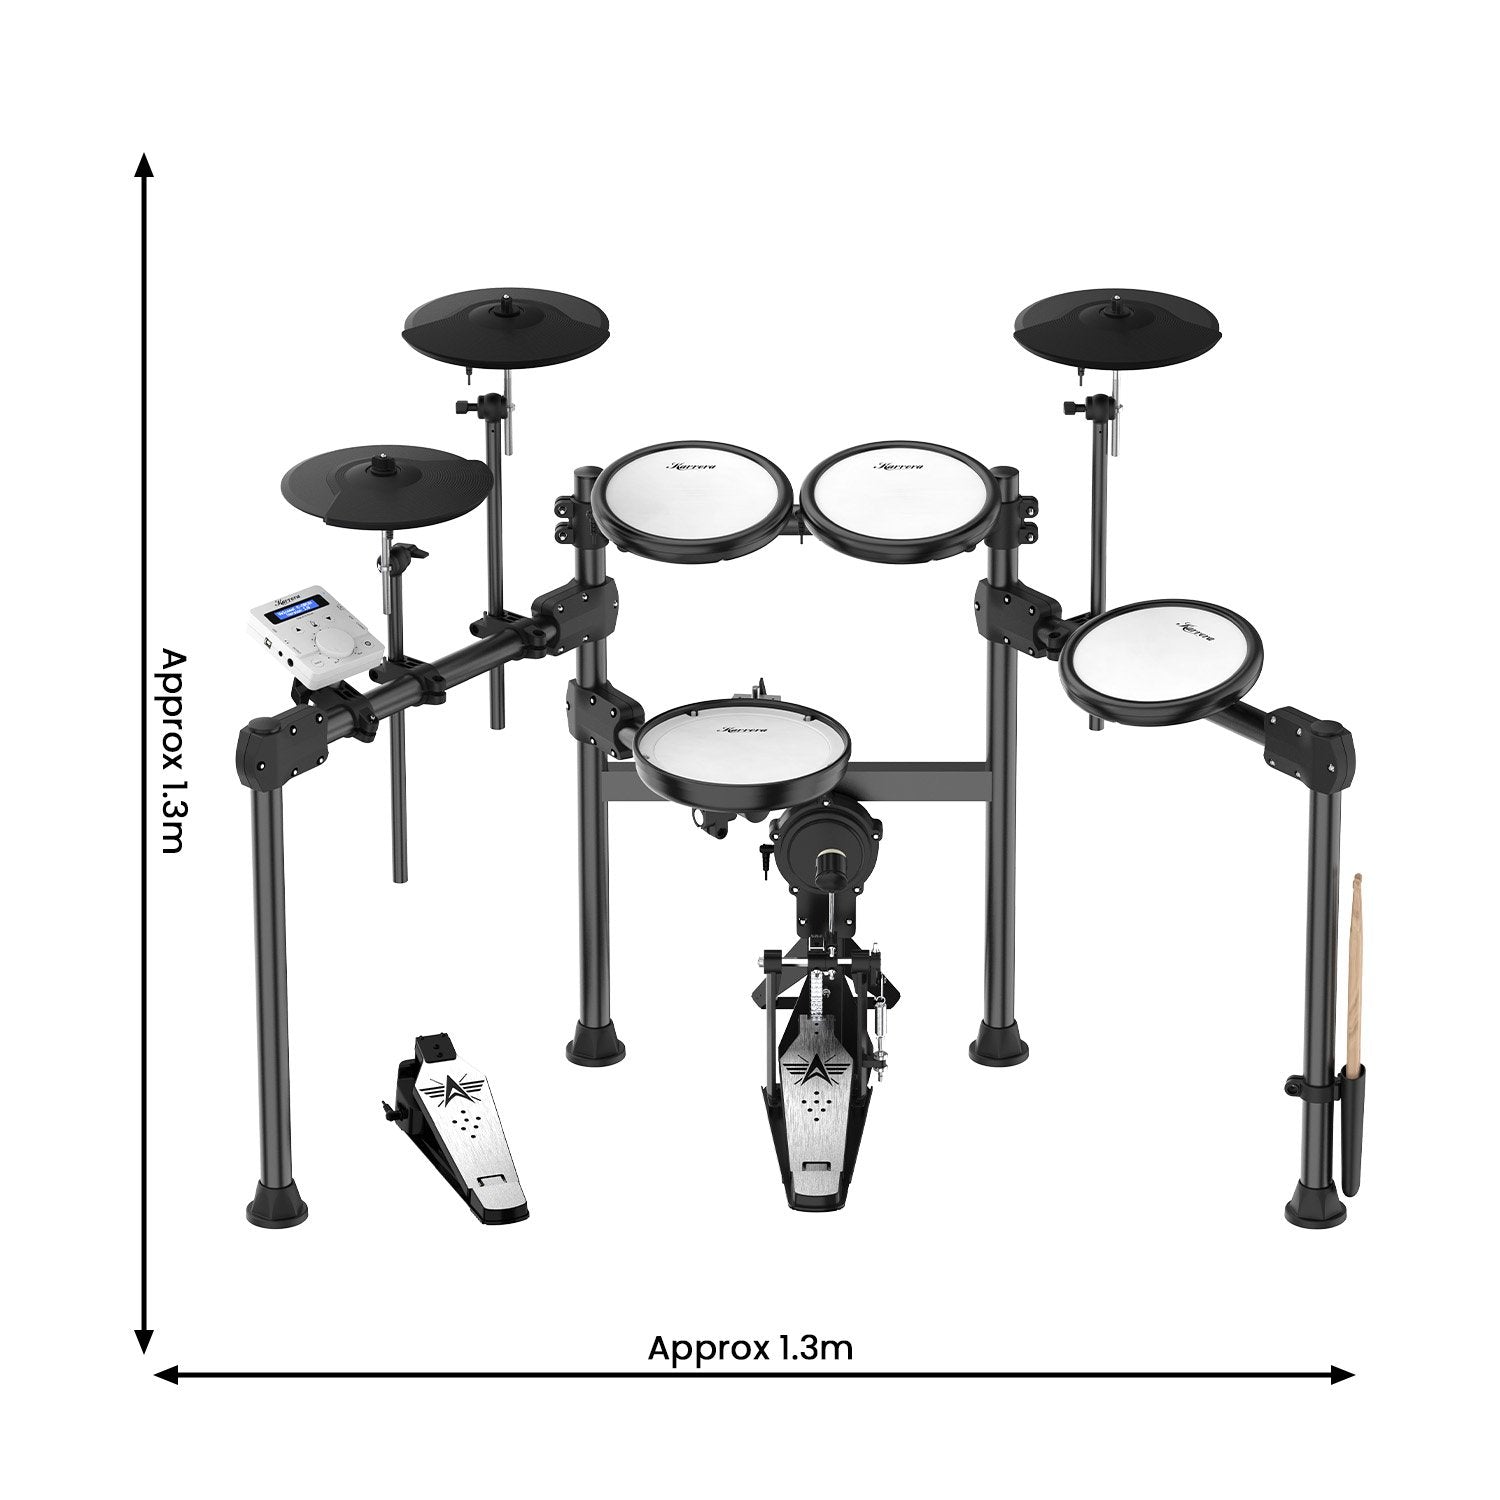 Quiet Mesh Drum Heads, 20 Kits, USB MIDI Electronic Drum Set